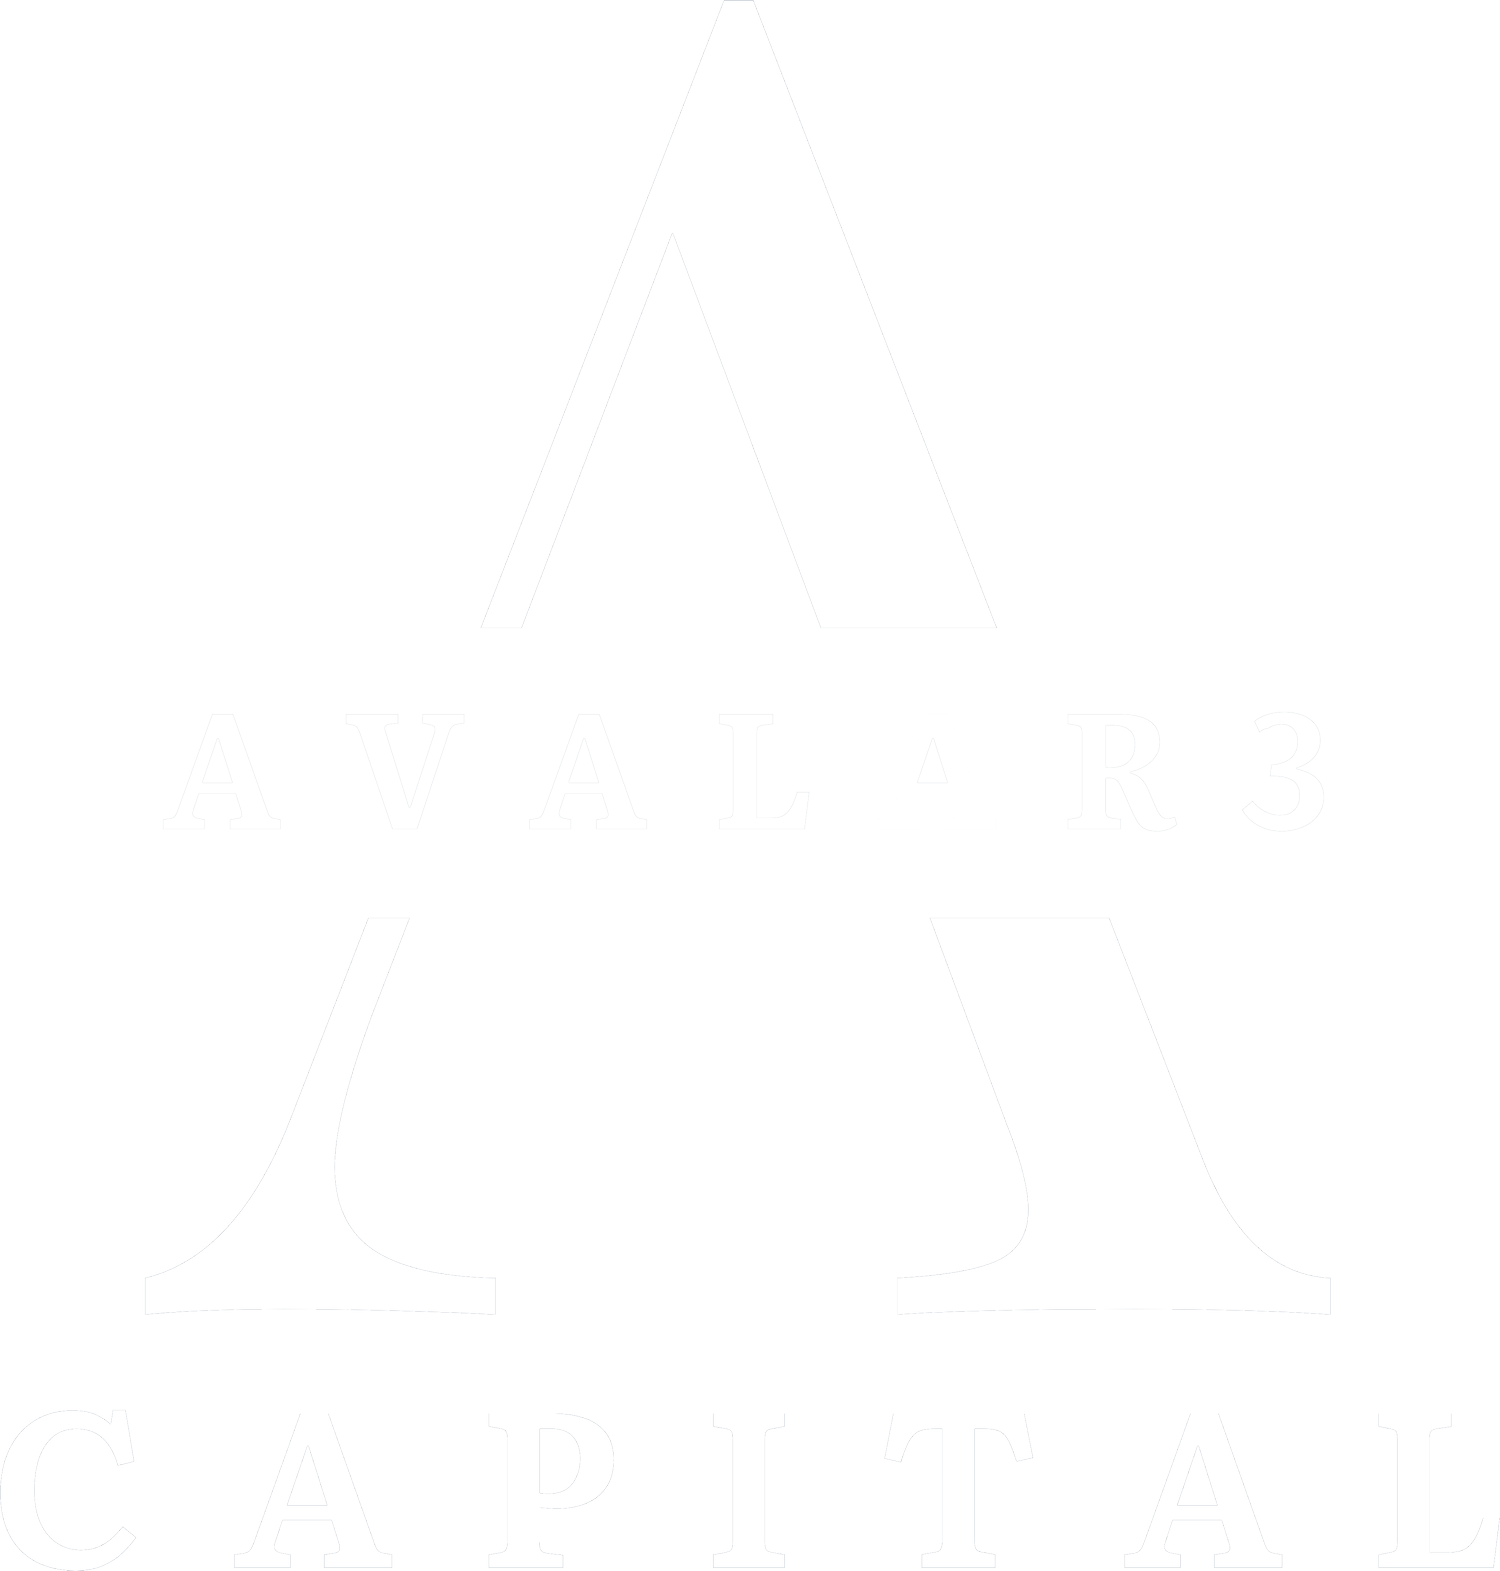 Avalar 3 Capital Partners